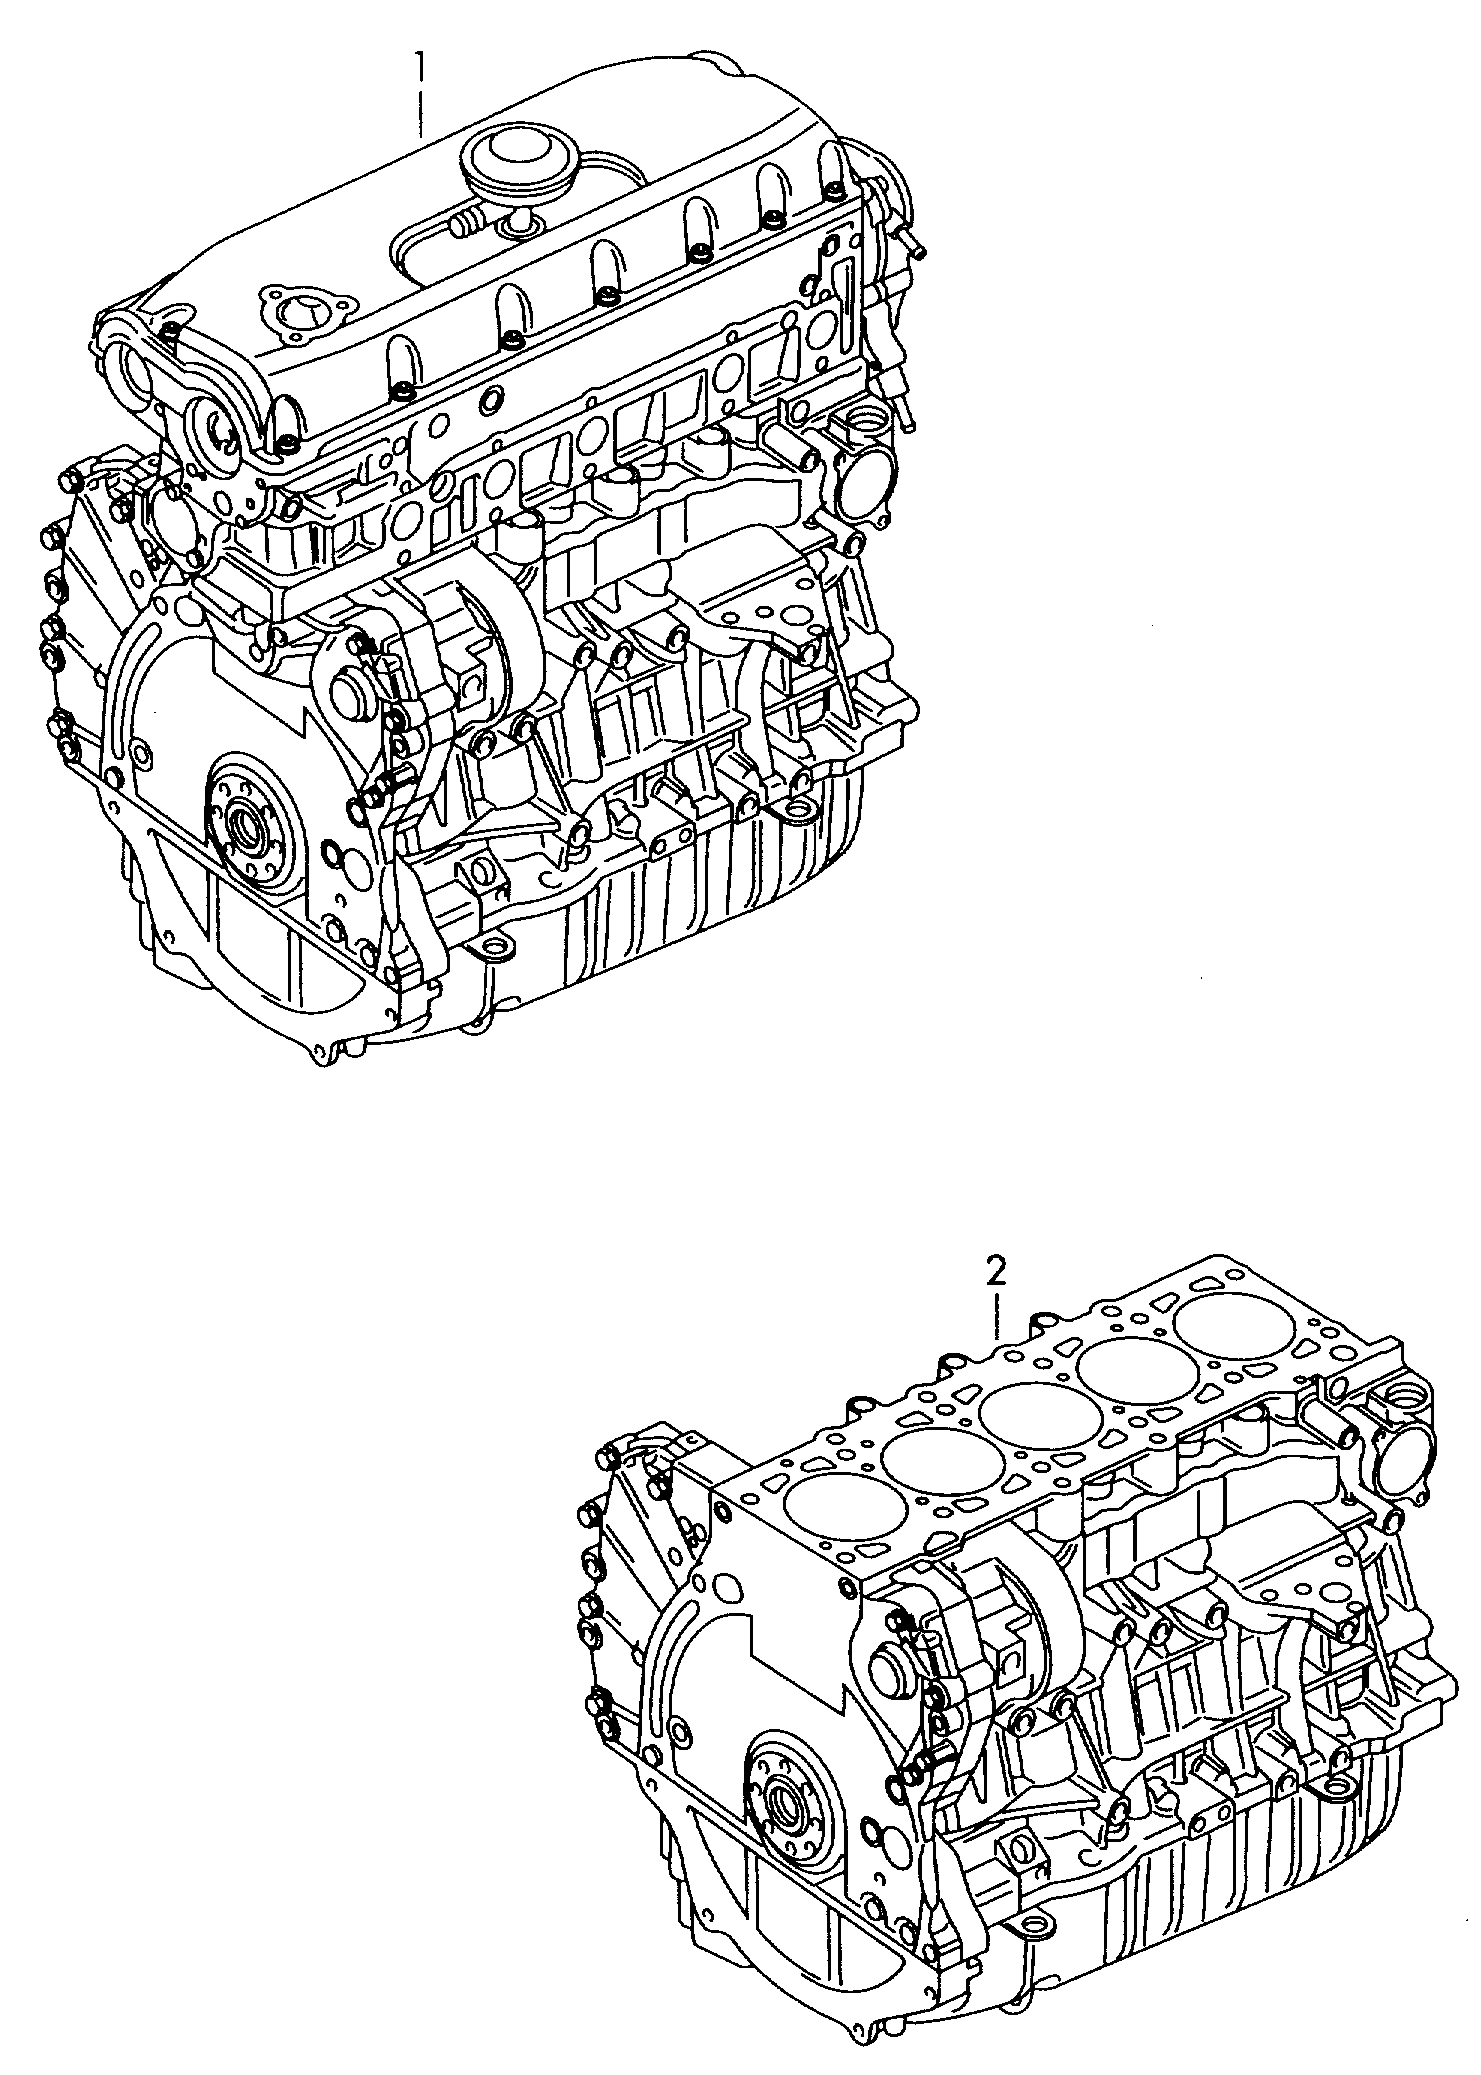 motor corto 2,5l - Transporter - tr